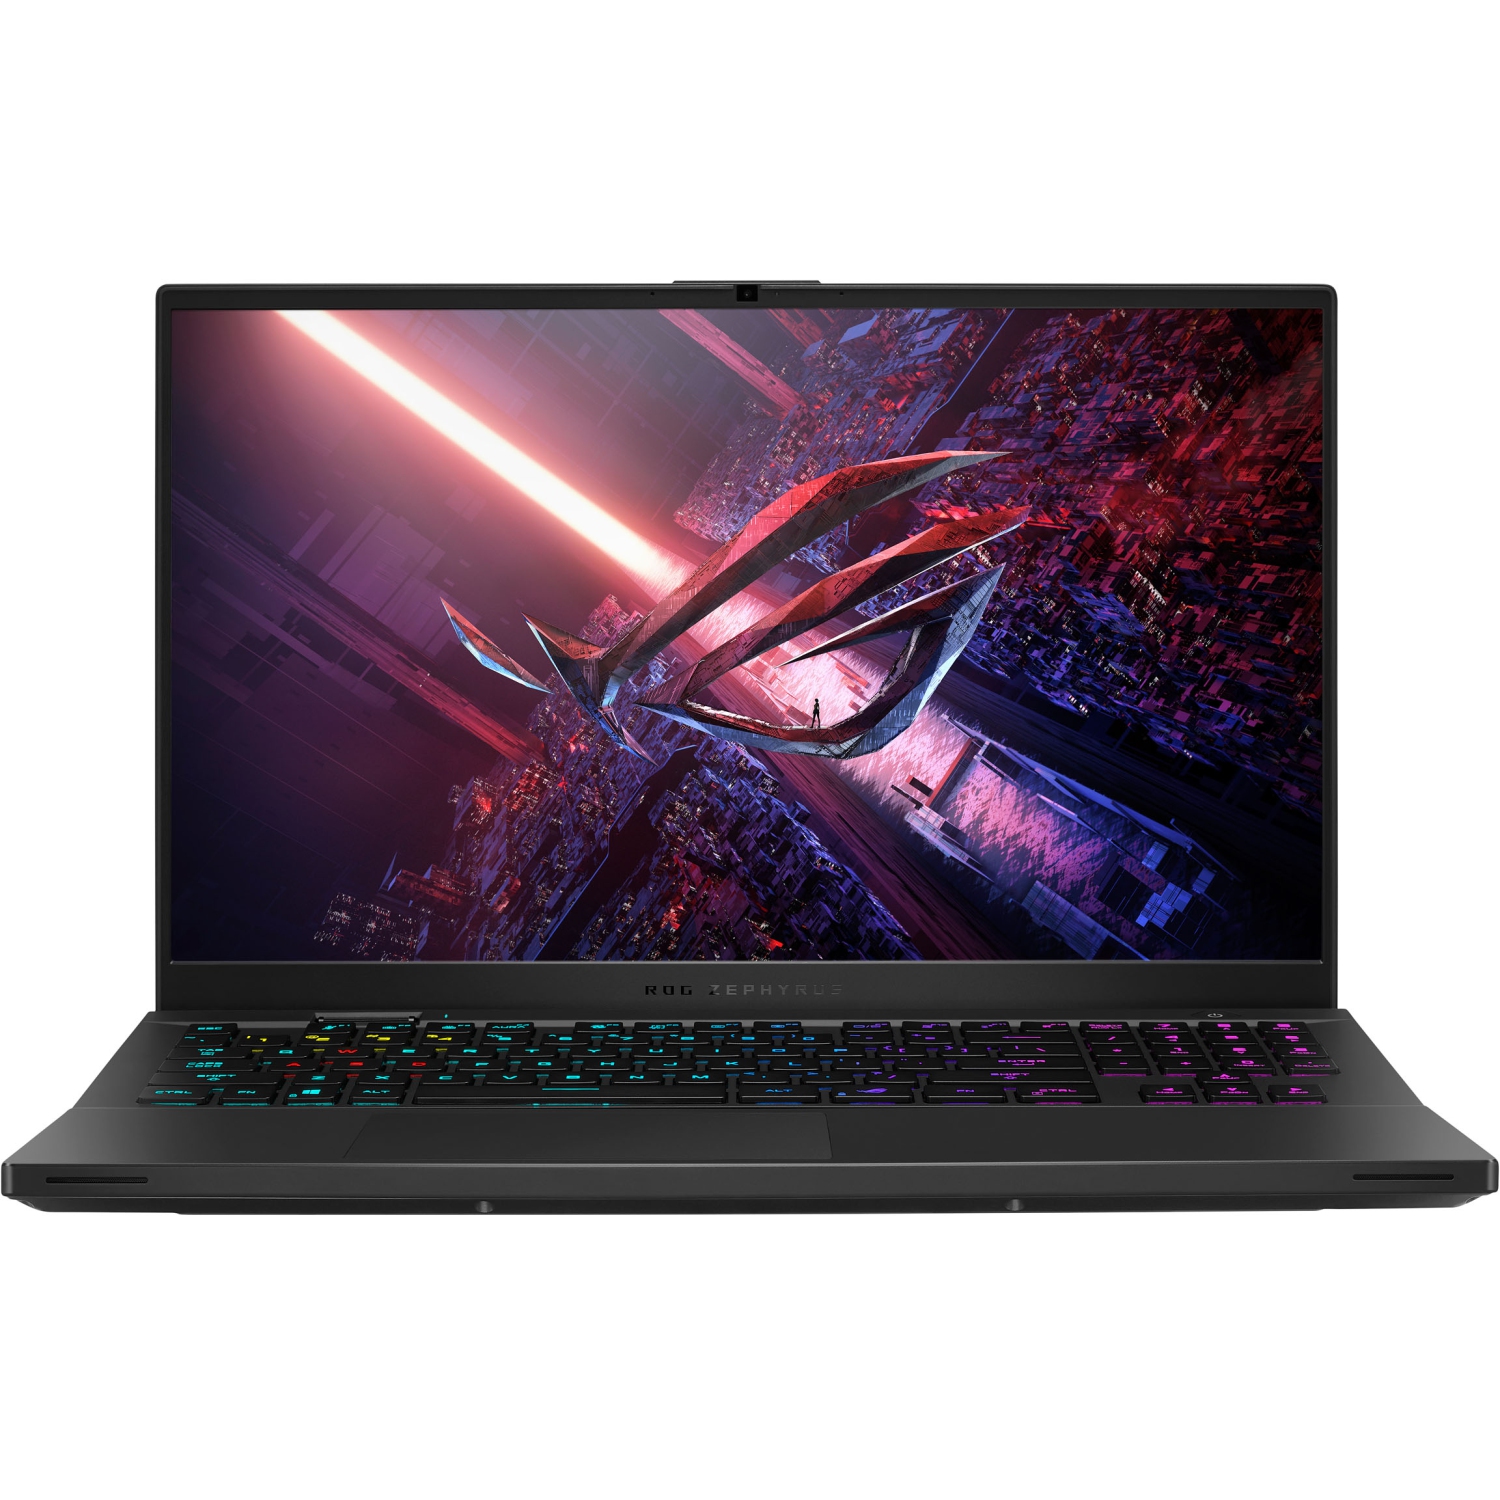 Custom ASUS ROG Zephyrus S17 Laptop (Intel i9-11900H, 32GB RAM, 1TB SSD, GeForce RTX 3080, 17.3" Win 10 Pro)